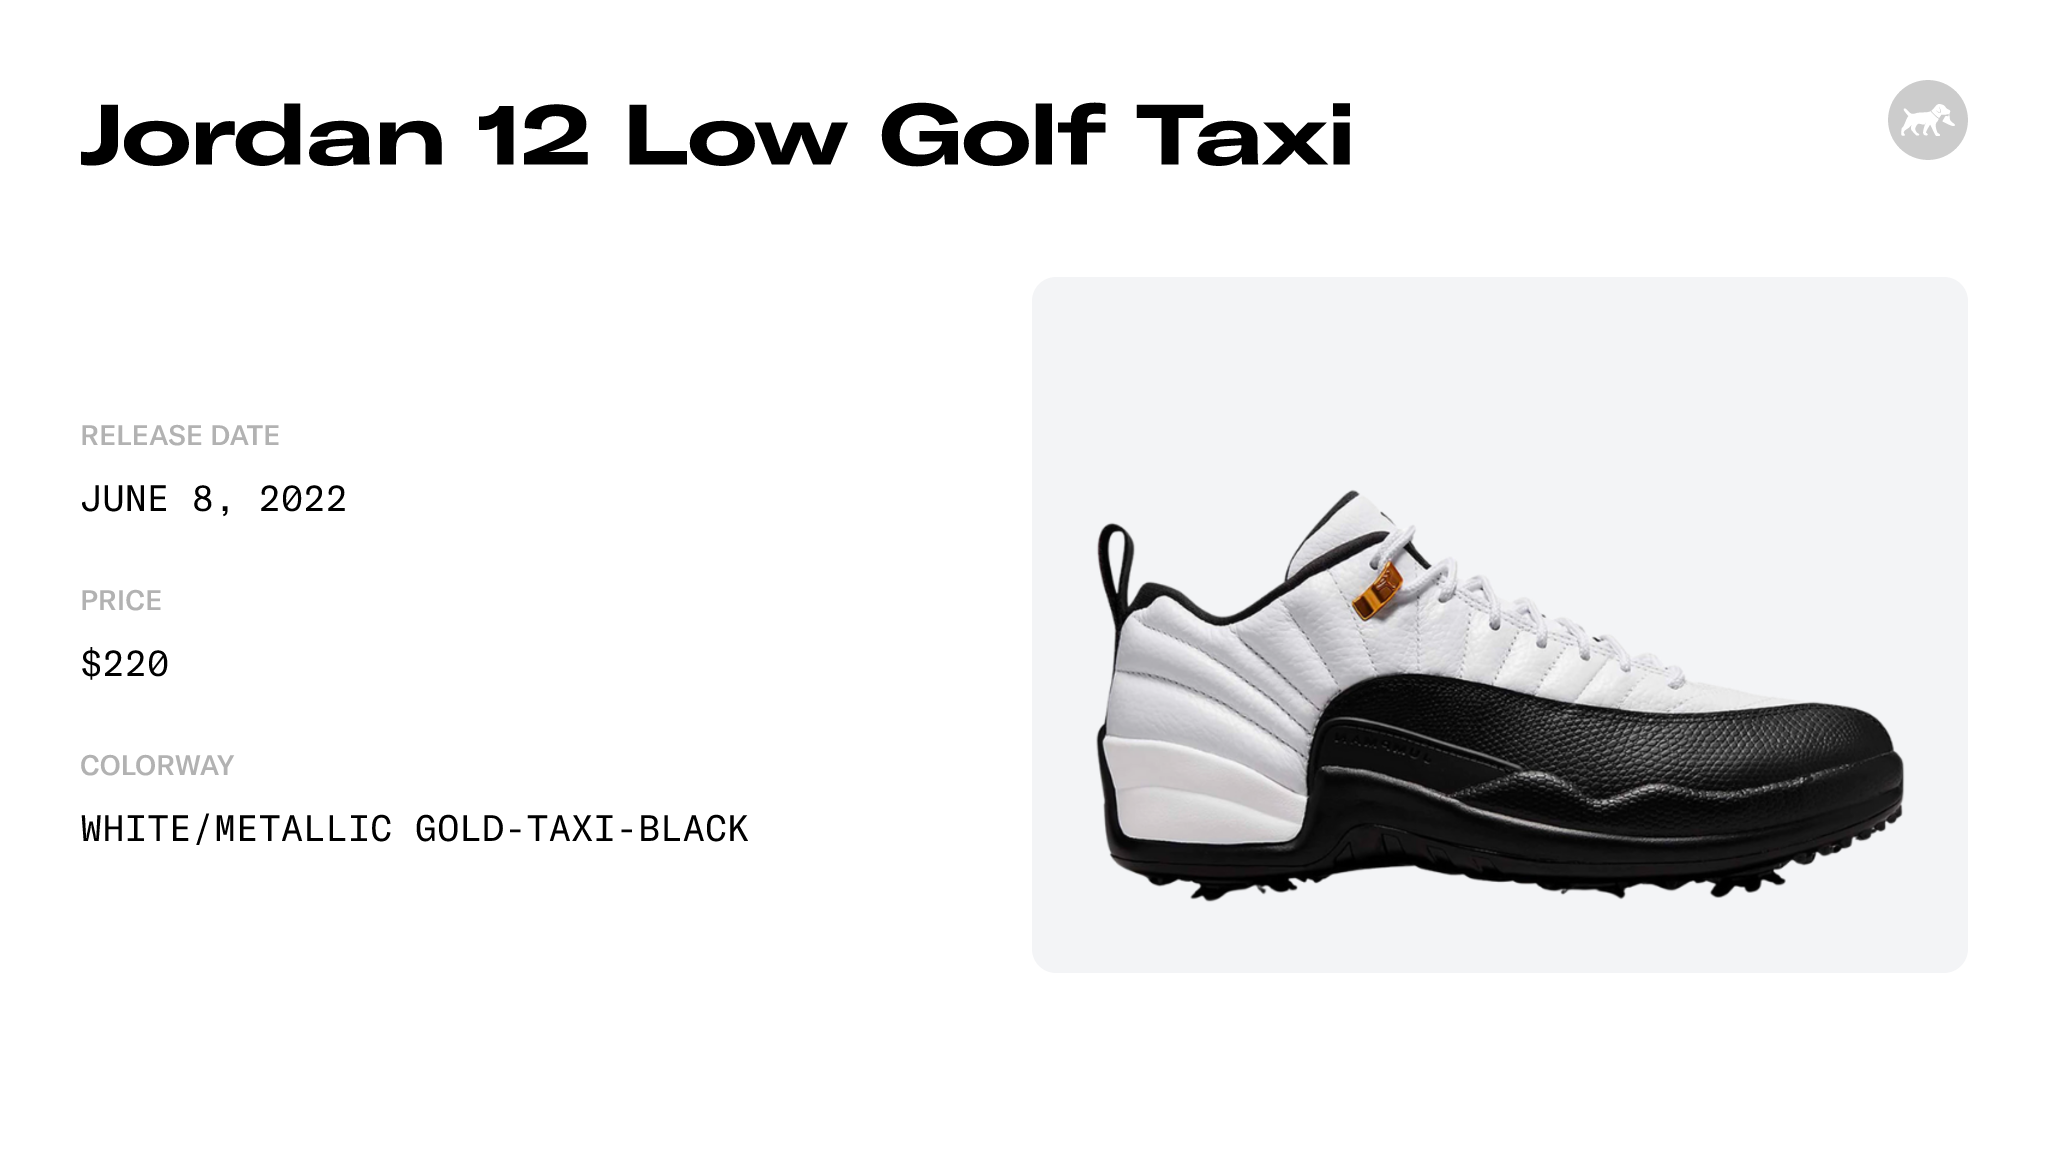 Jordan 12 Low Golf Taxi Raffles and Release Date